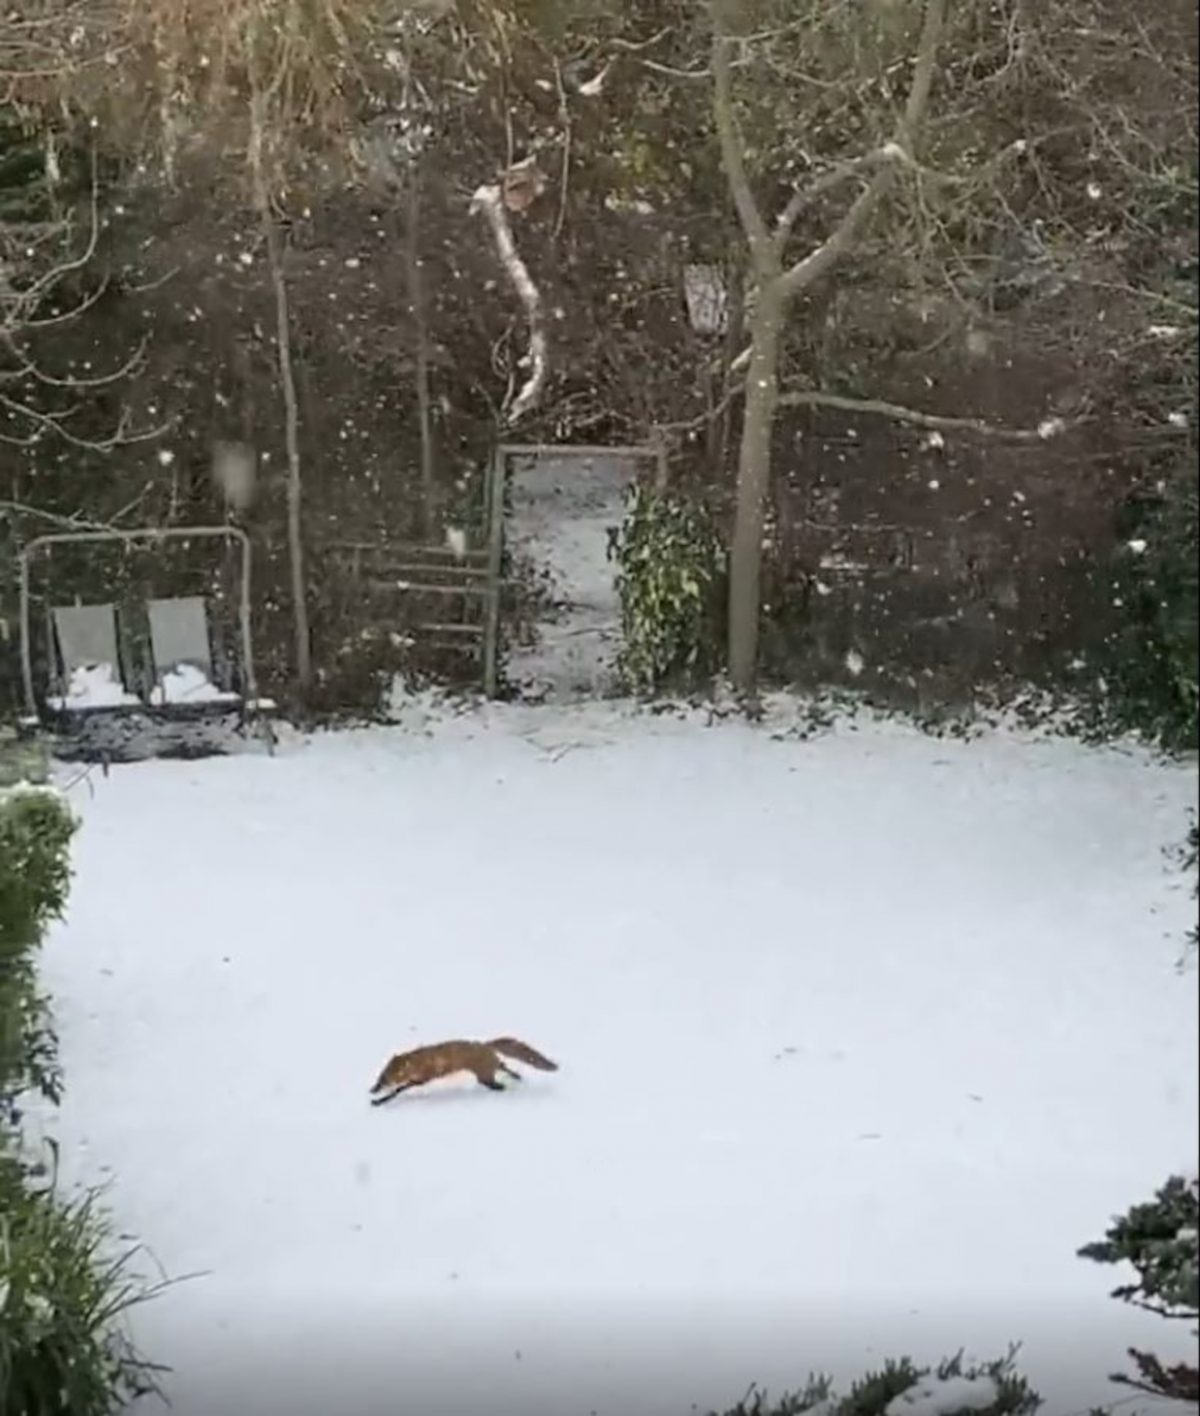 Still of the fox racing through the snow in the garden.